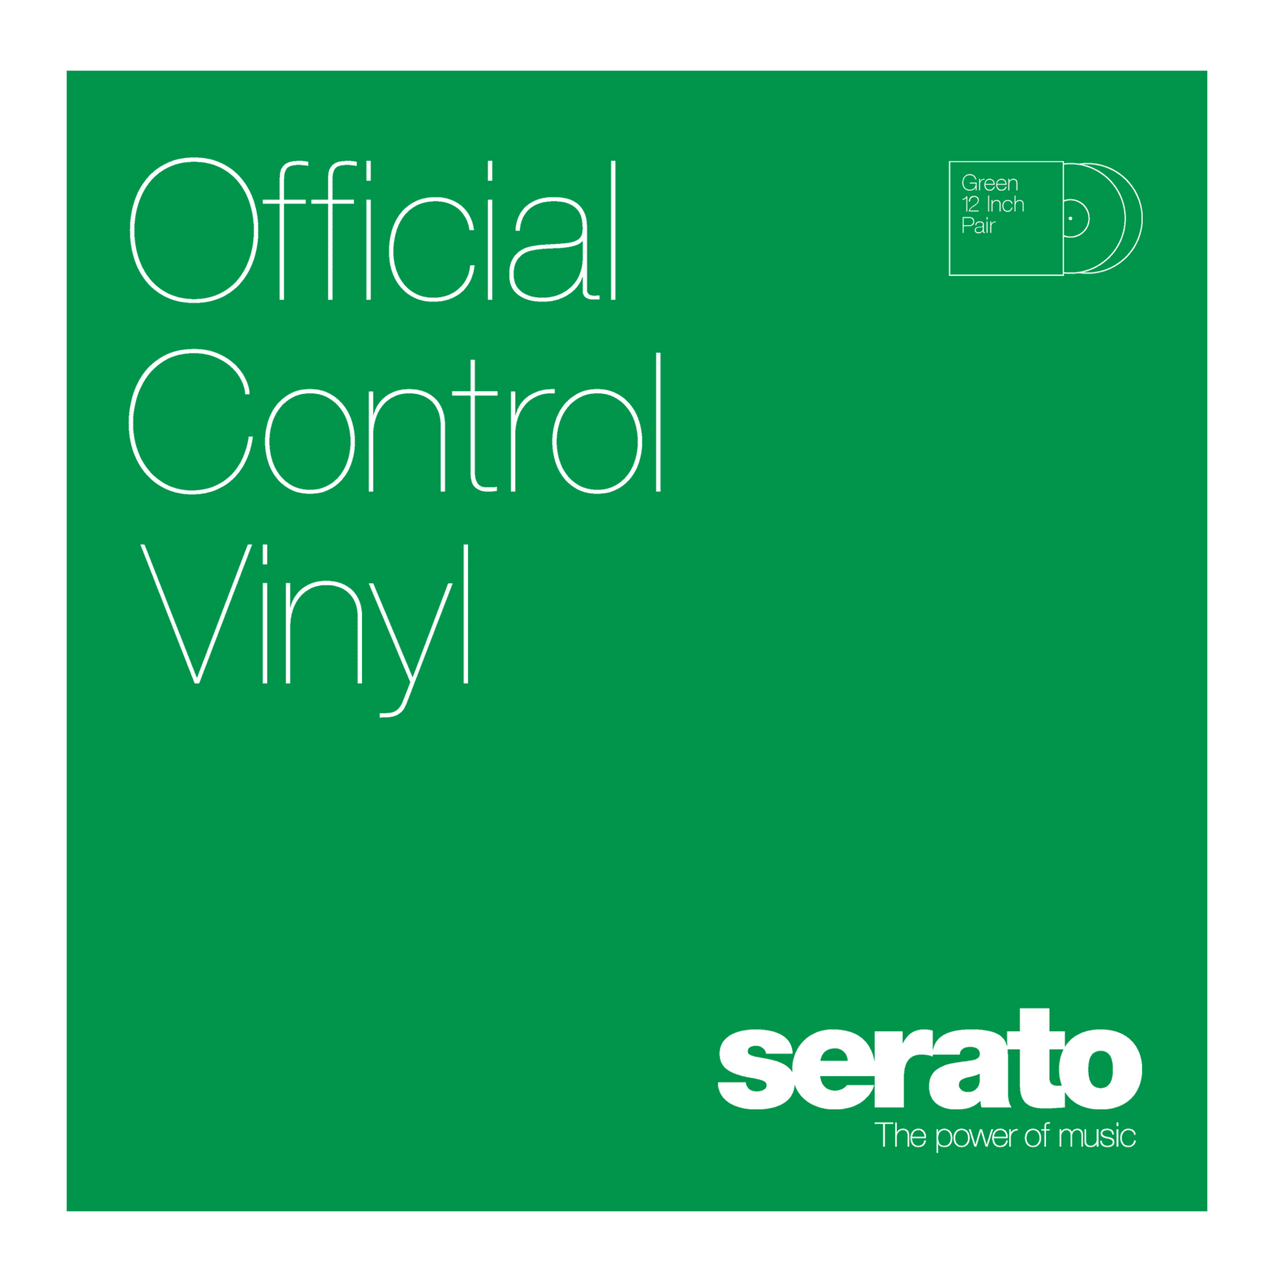 Serato Control Vinyl 12" pair in green.